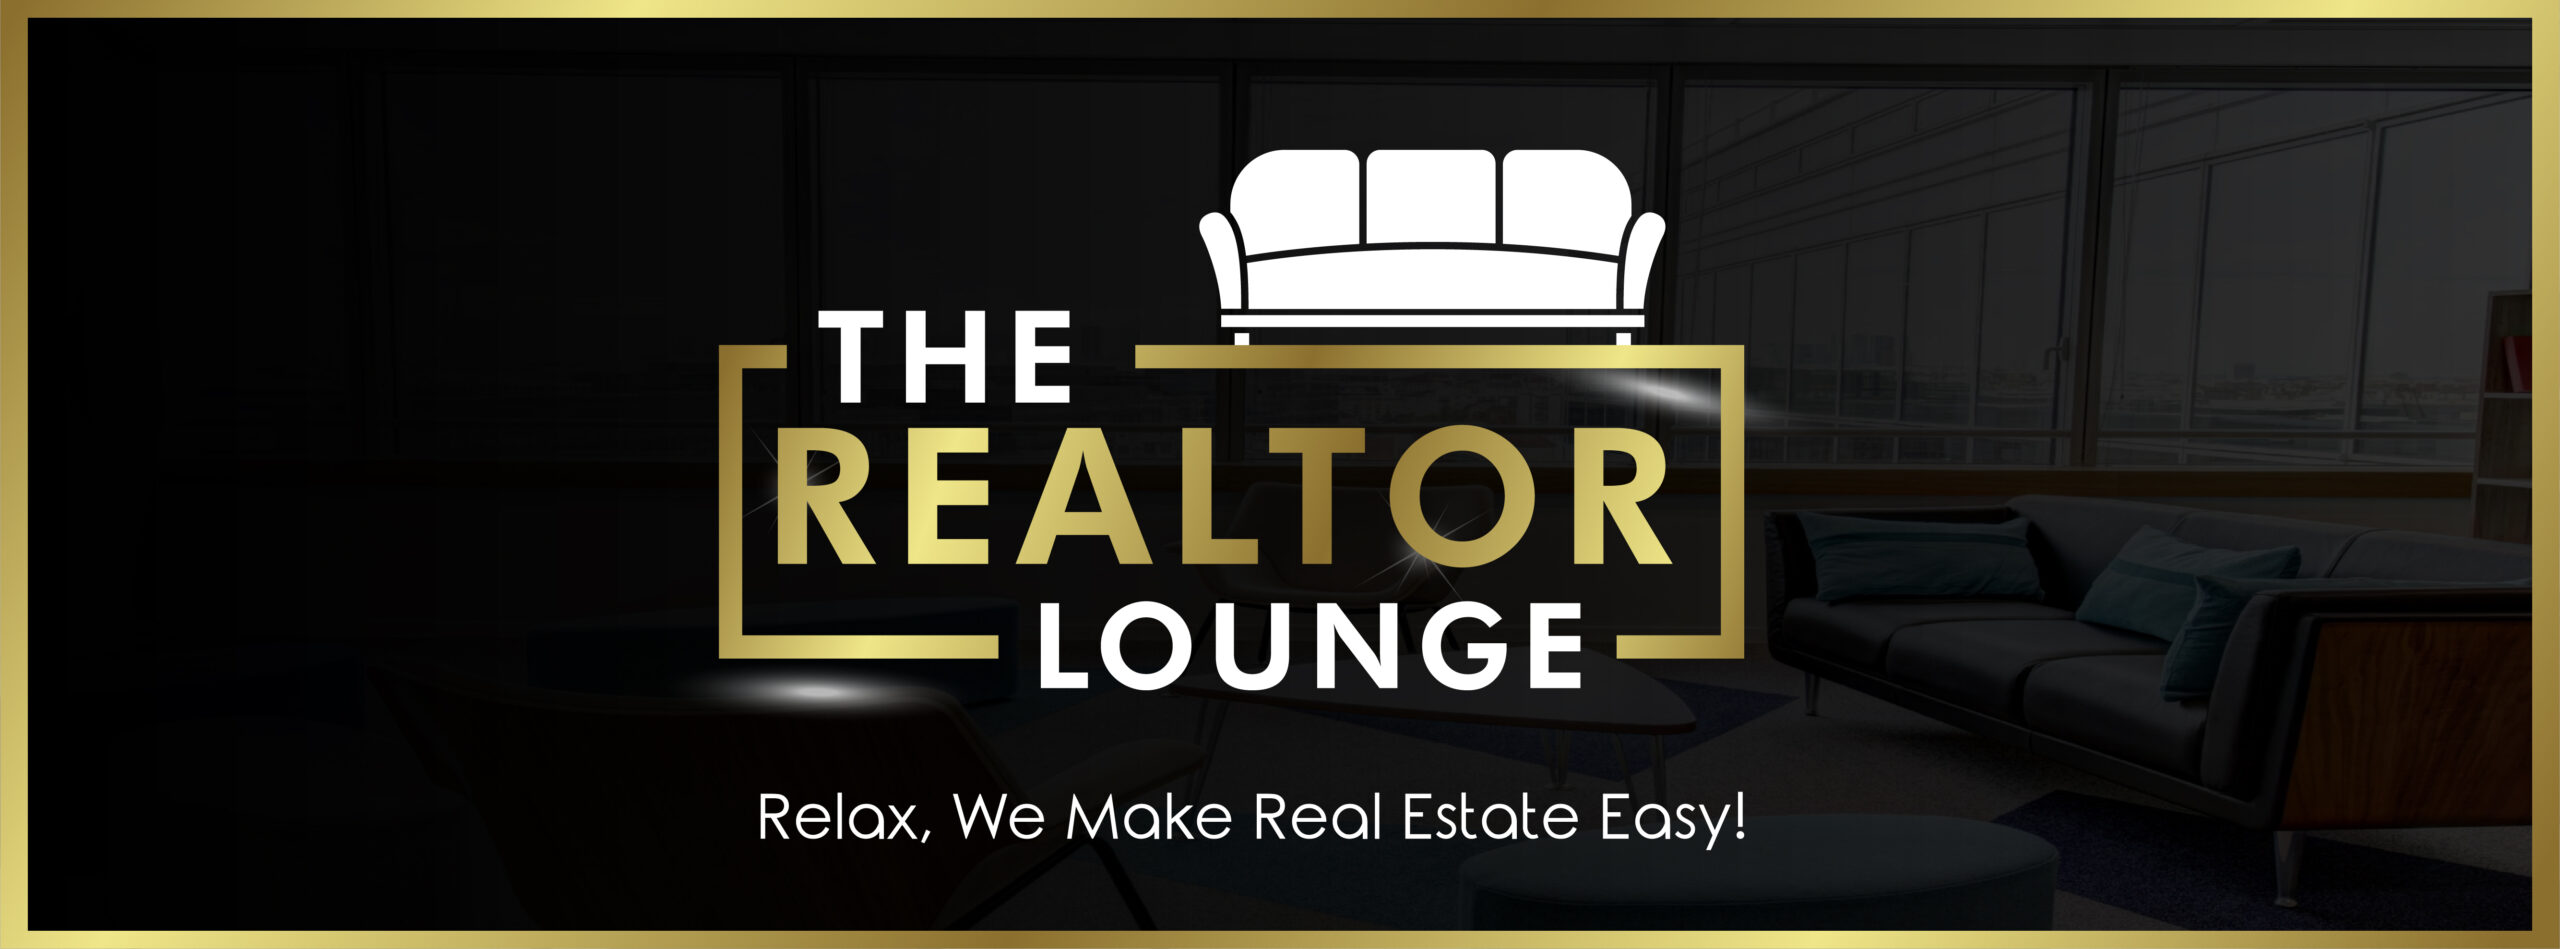 The Realtor Lounge